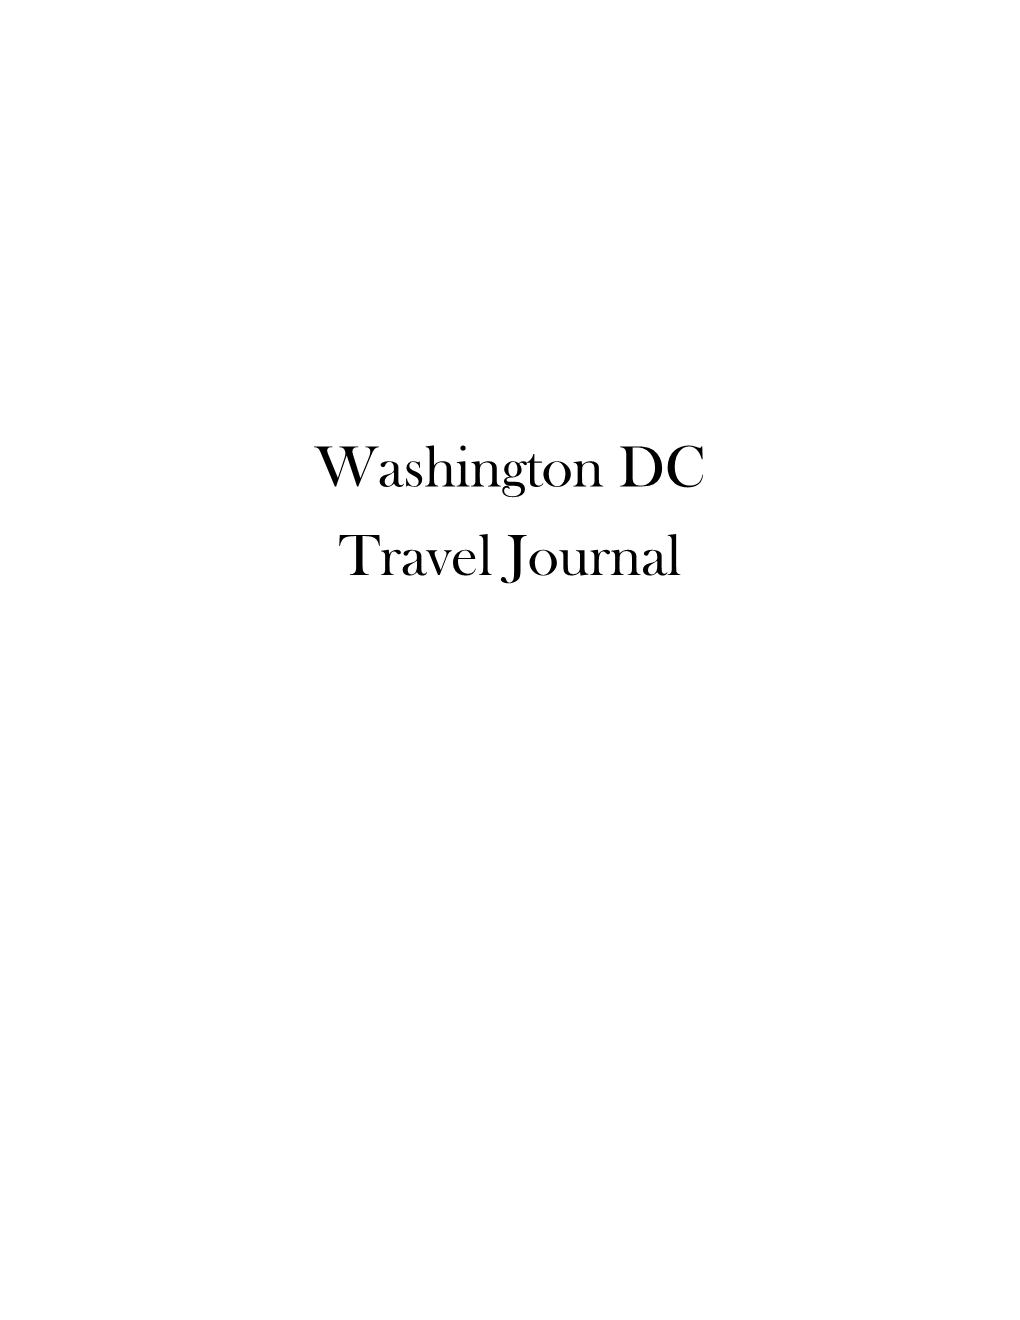 Washington DC Travel Journal